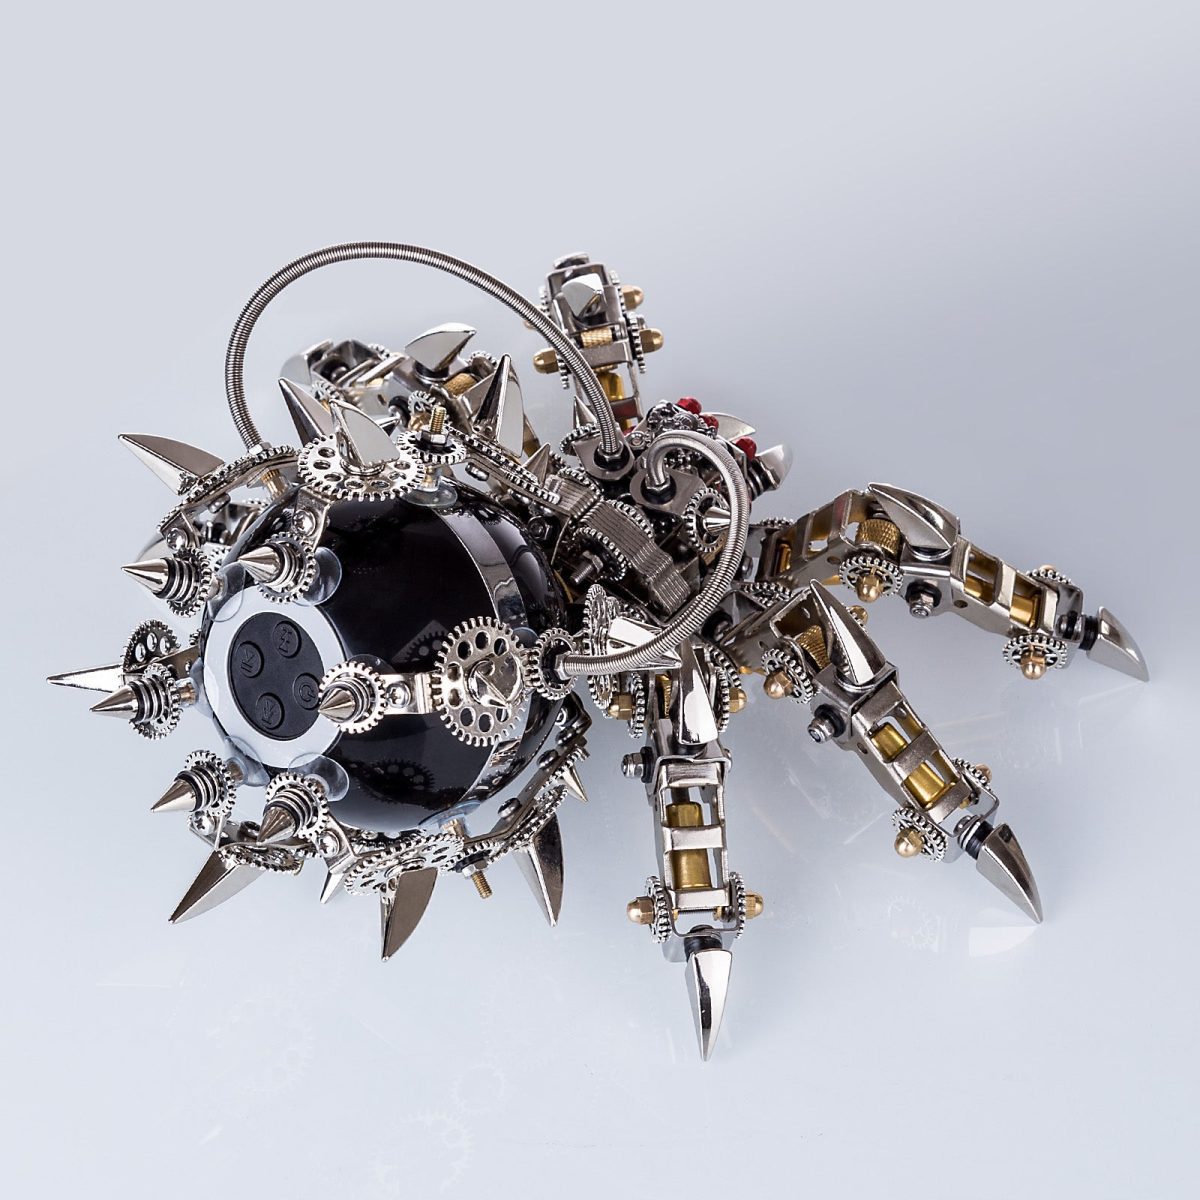 DIY 3D Metal Spider King Bluetooth Speaker Assembly Puzzle Kit